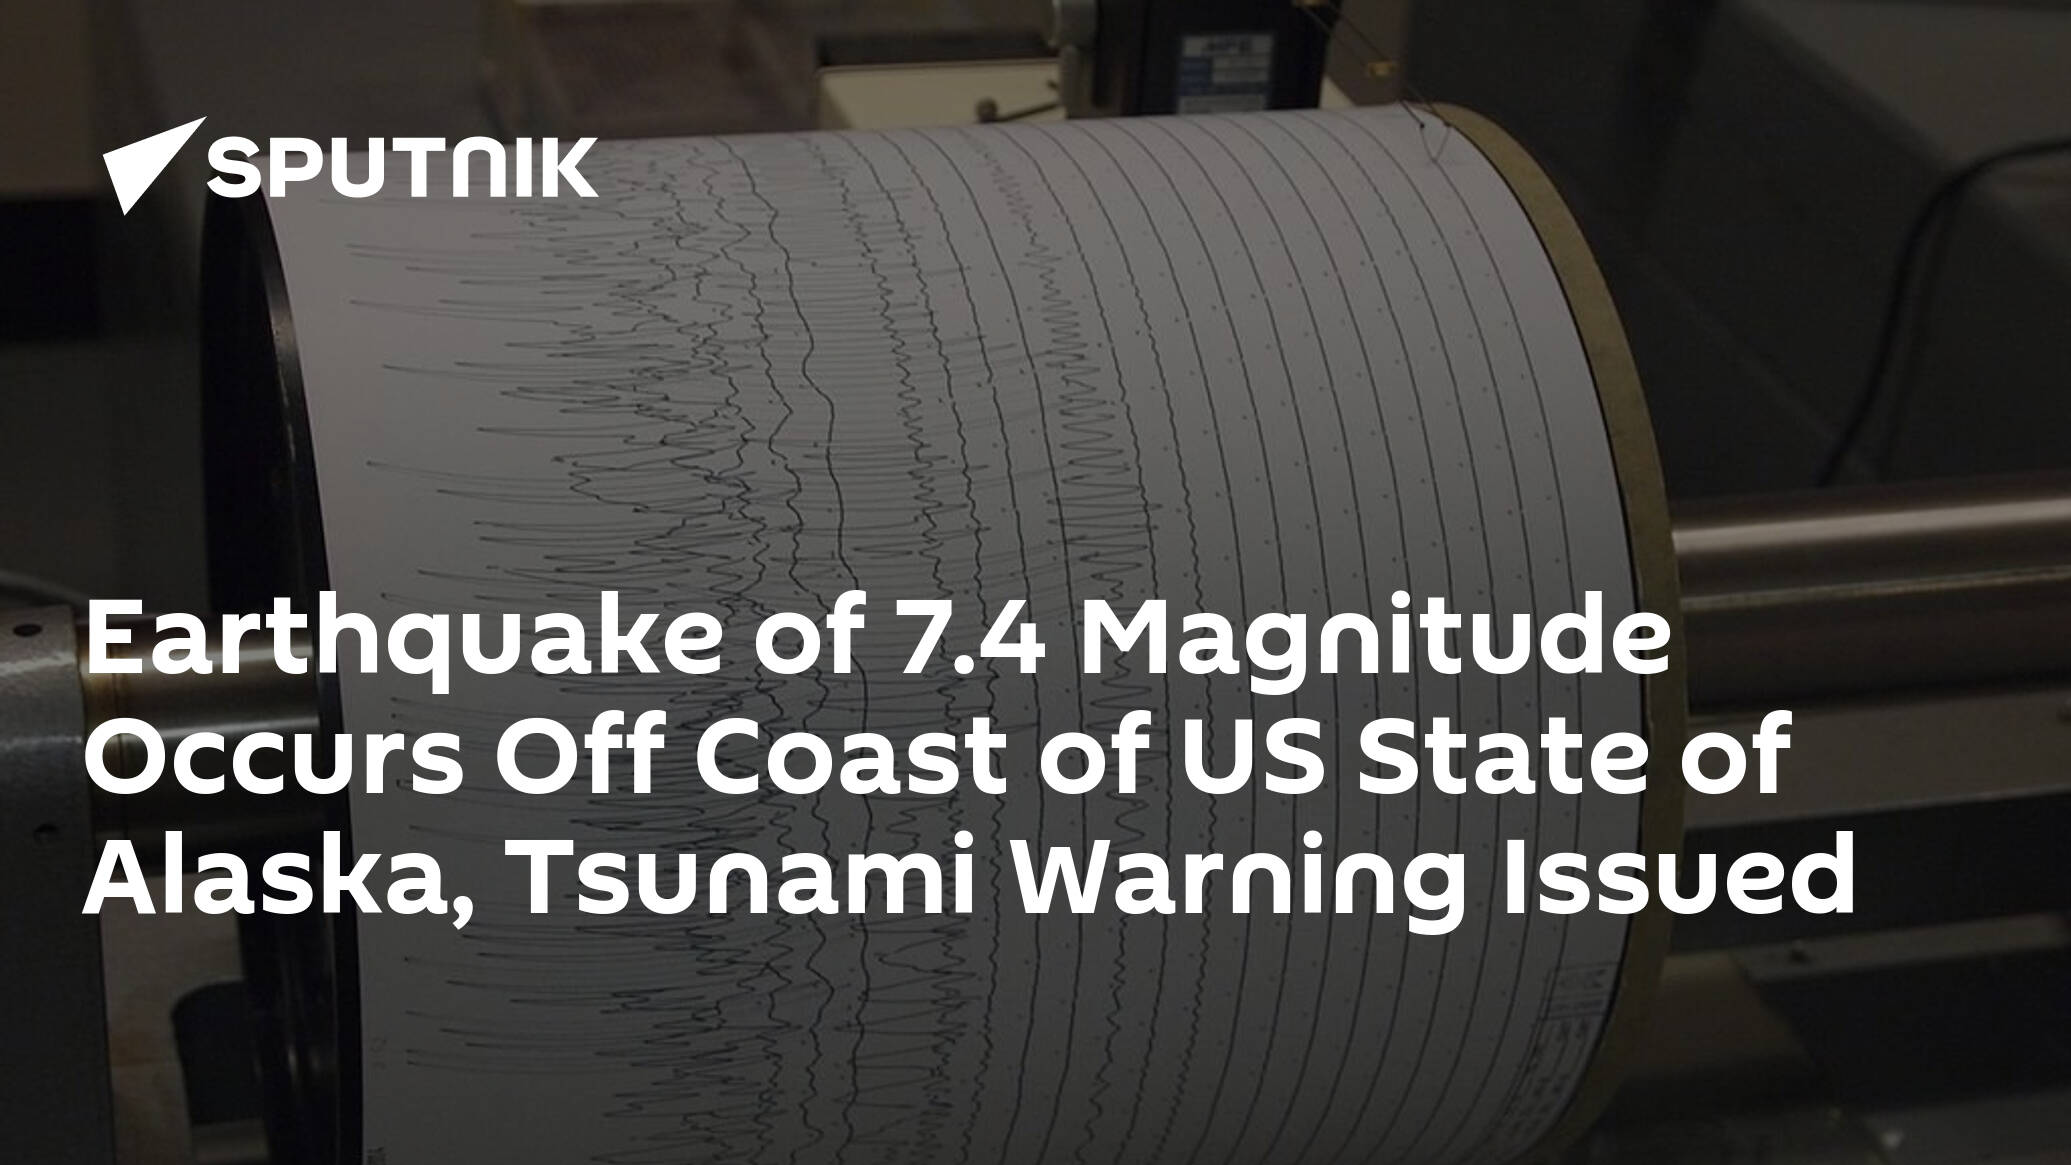 Earthquake of 7.4 Magnitude Occurs Off Coast of US State of Alaska, Tsunami Warning Issued